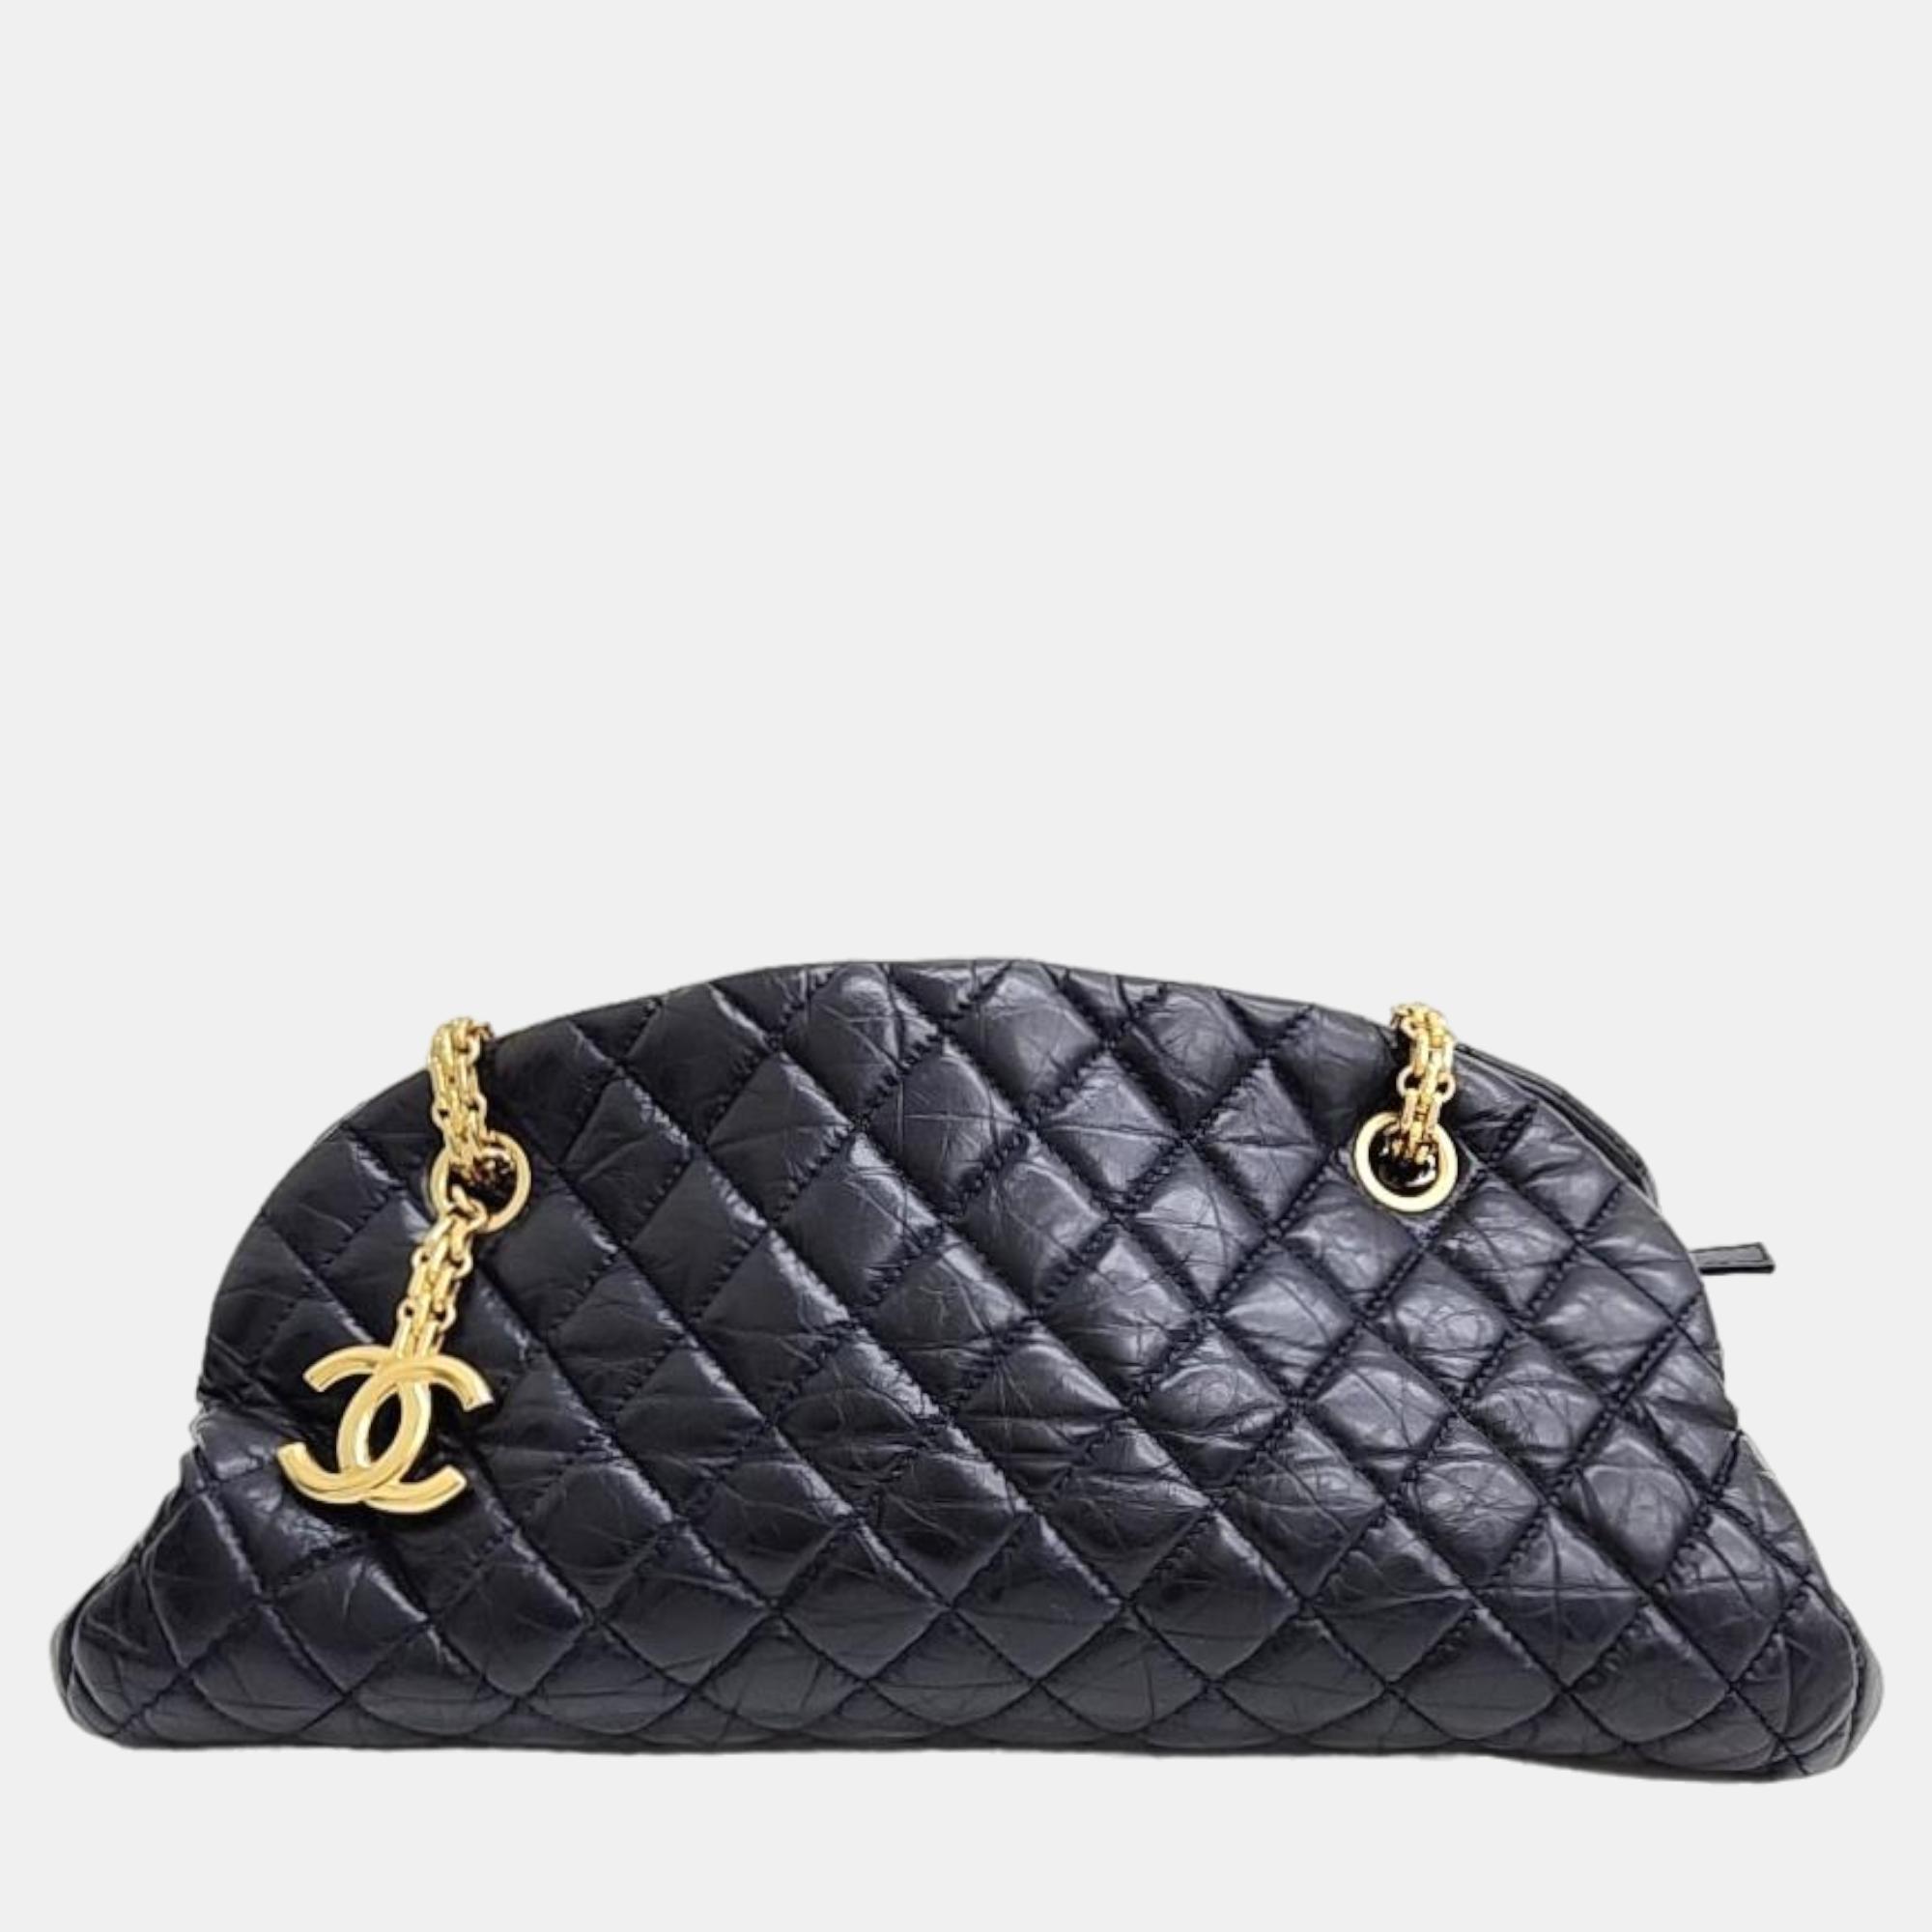 Chanel Mademoiselle Bowling Bag